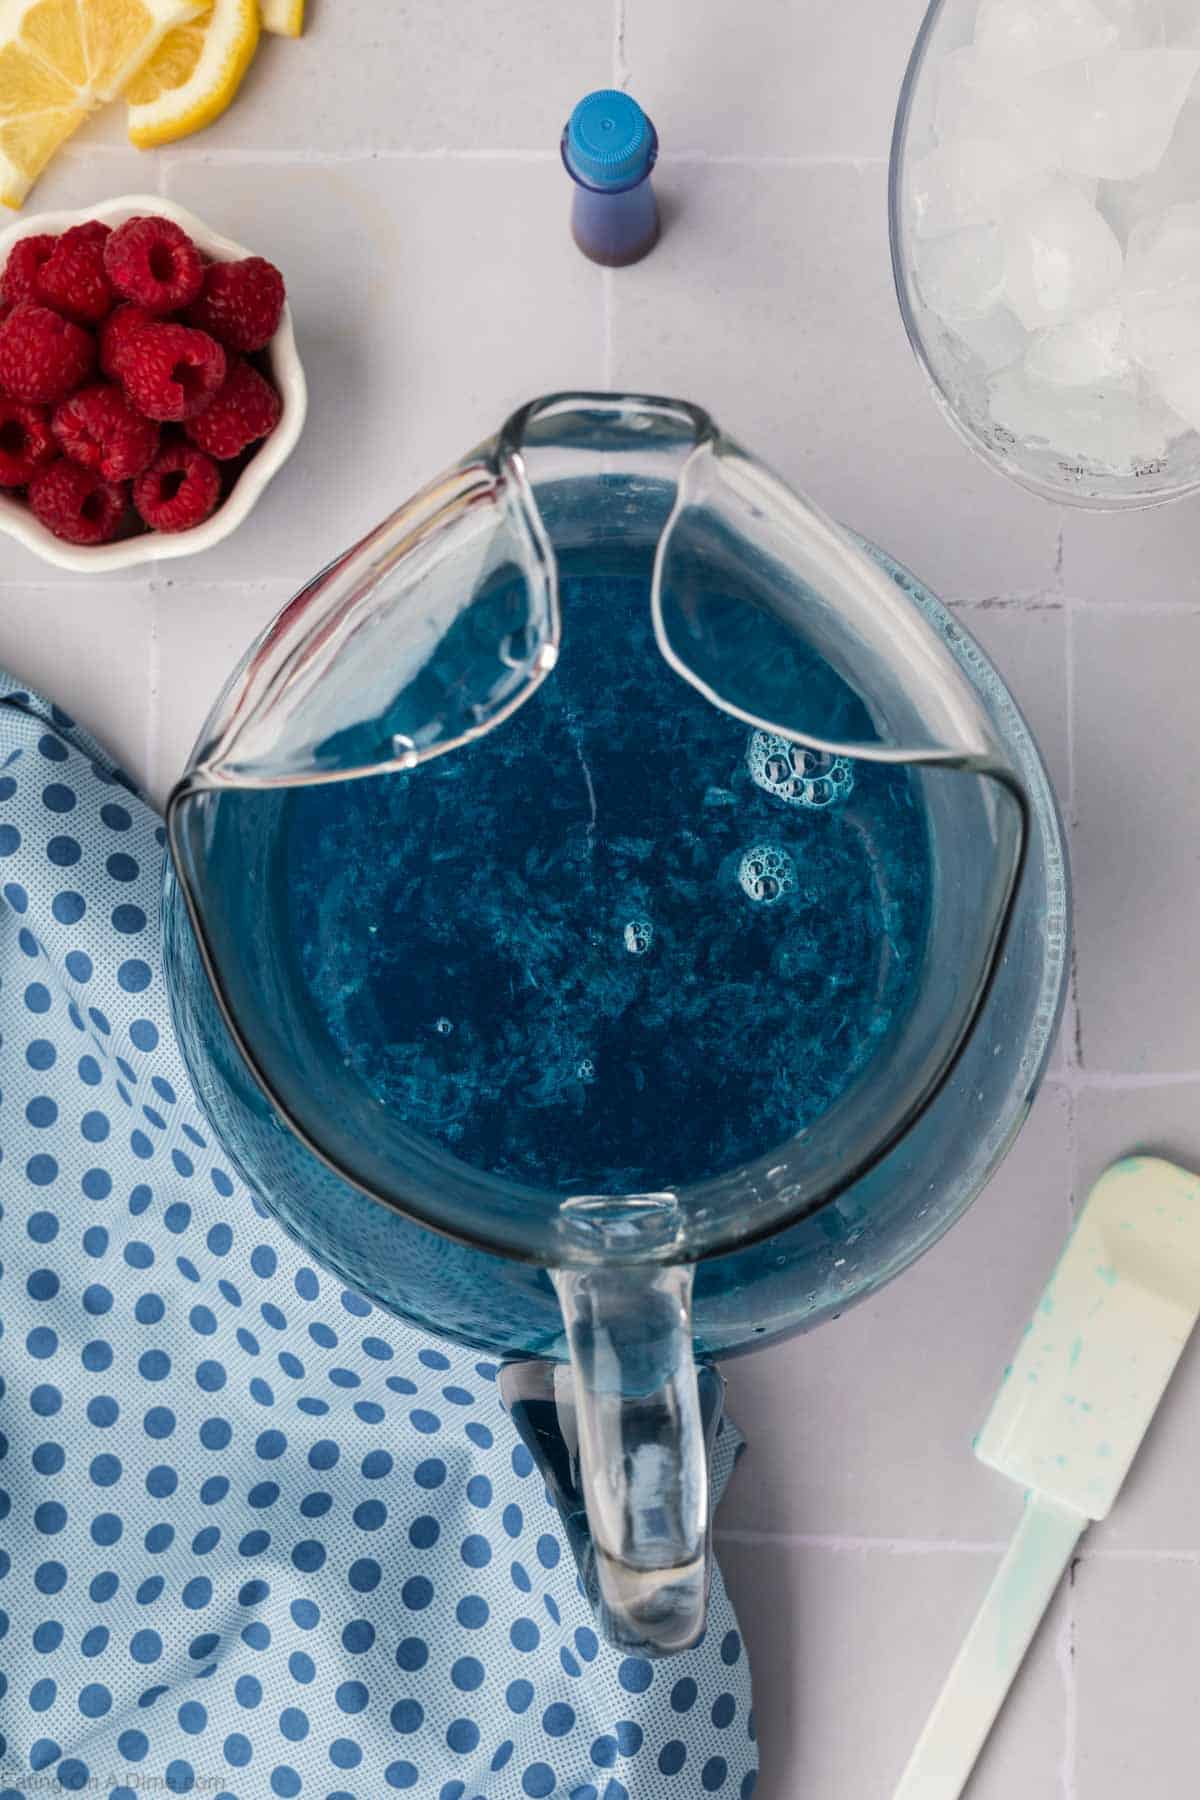 Blue lemonade in a glass pitcher